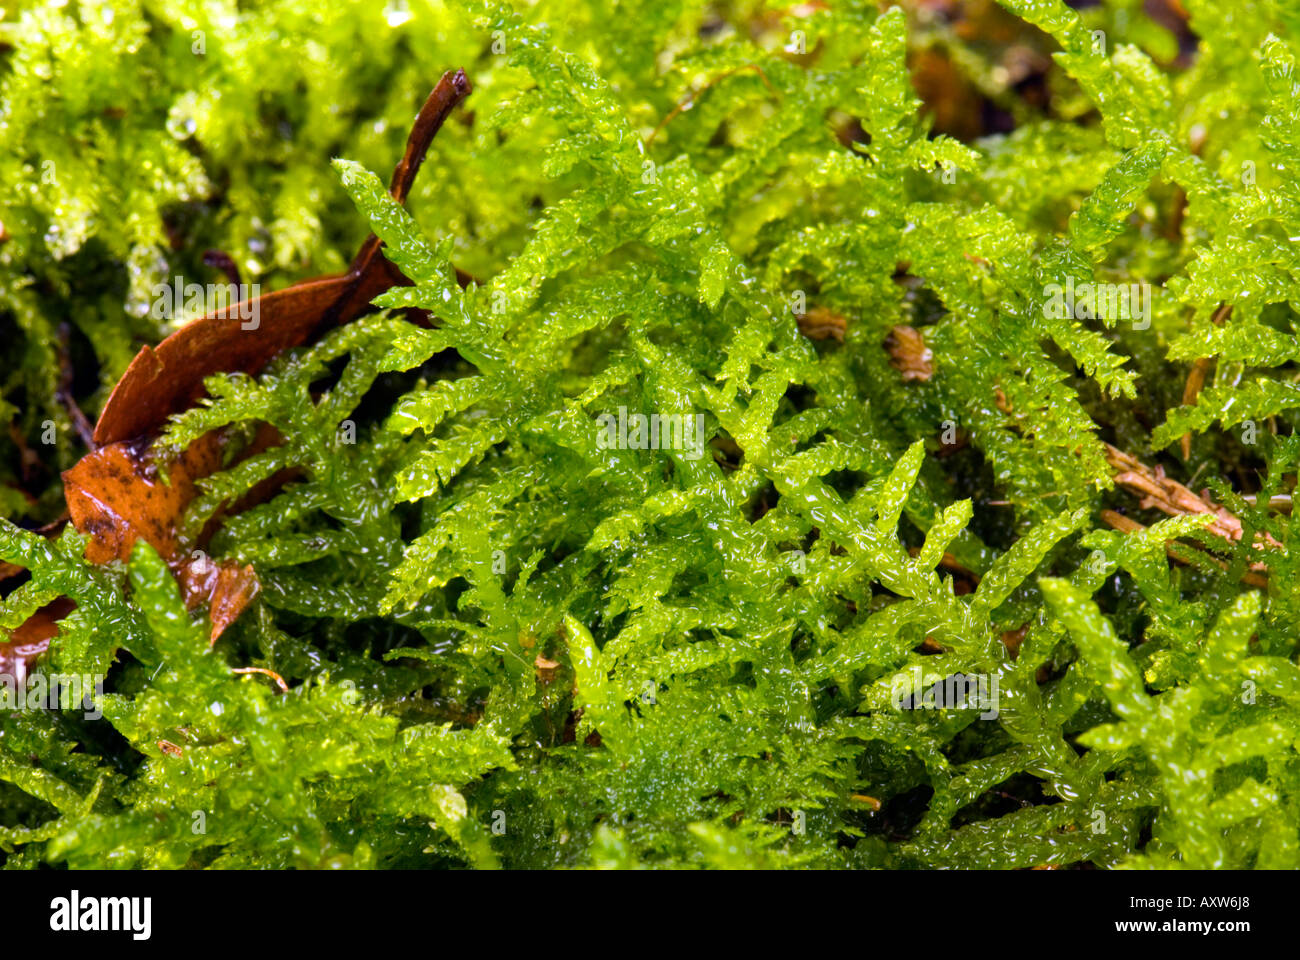 fresh dry wet damp green moss fern habitat forest makro close up plant natural ground Stock Photo